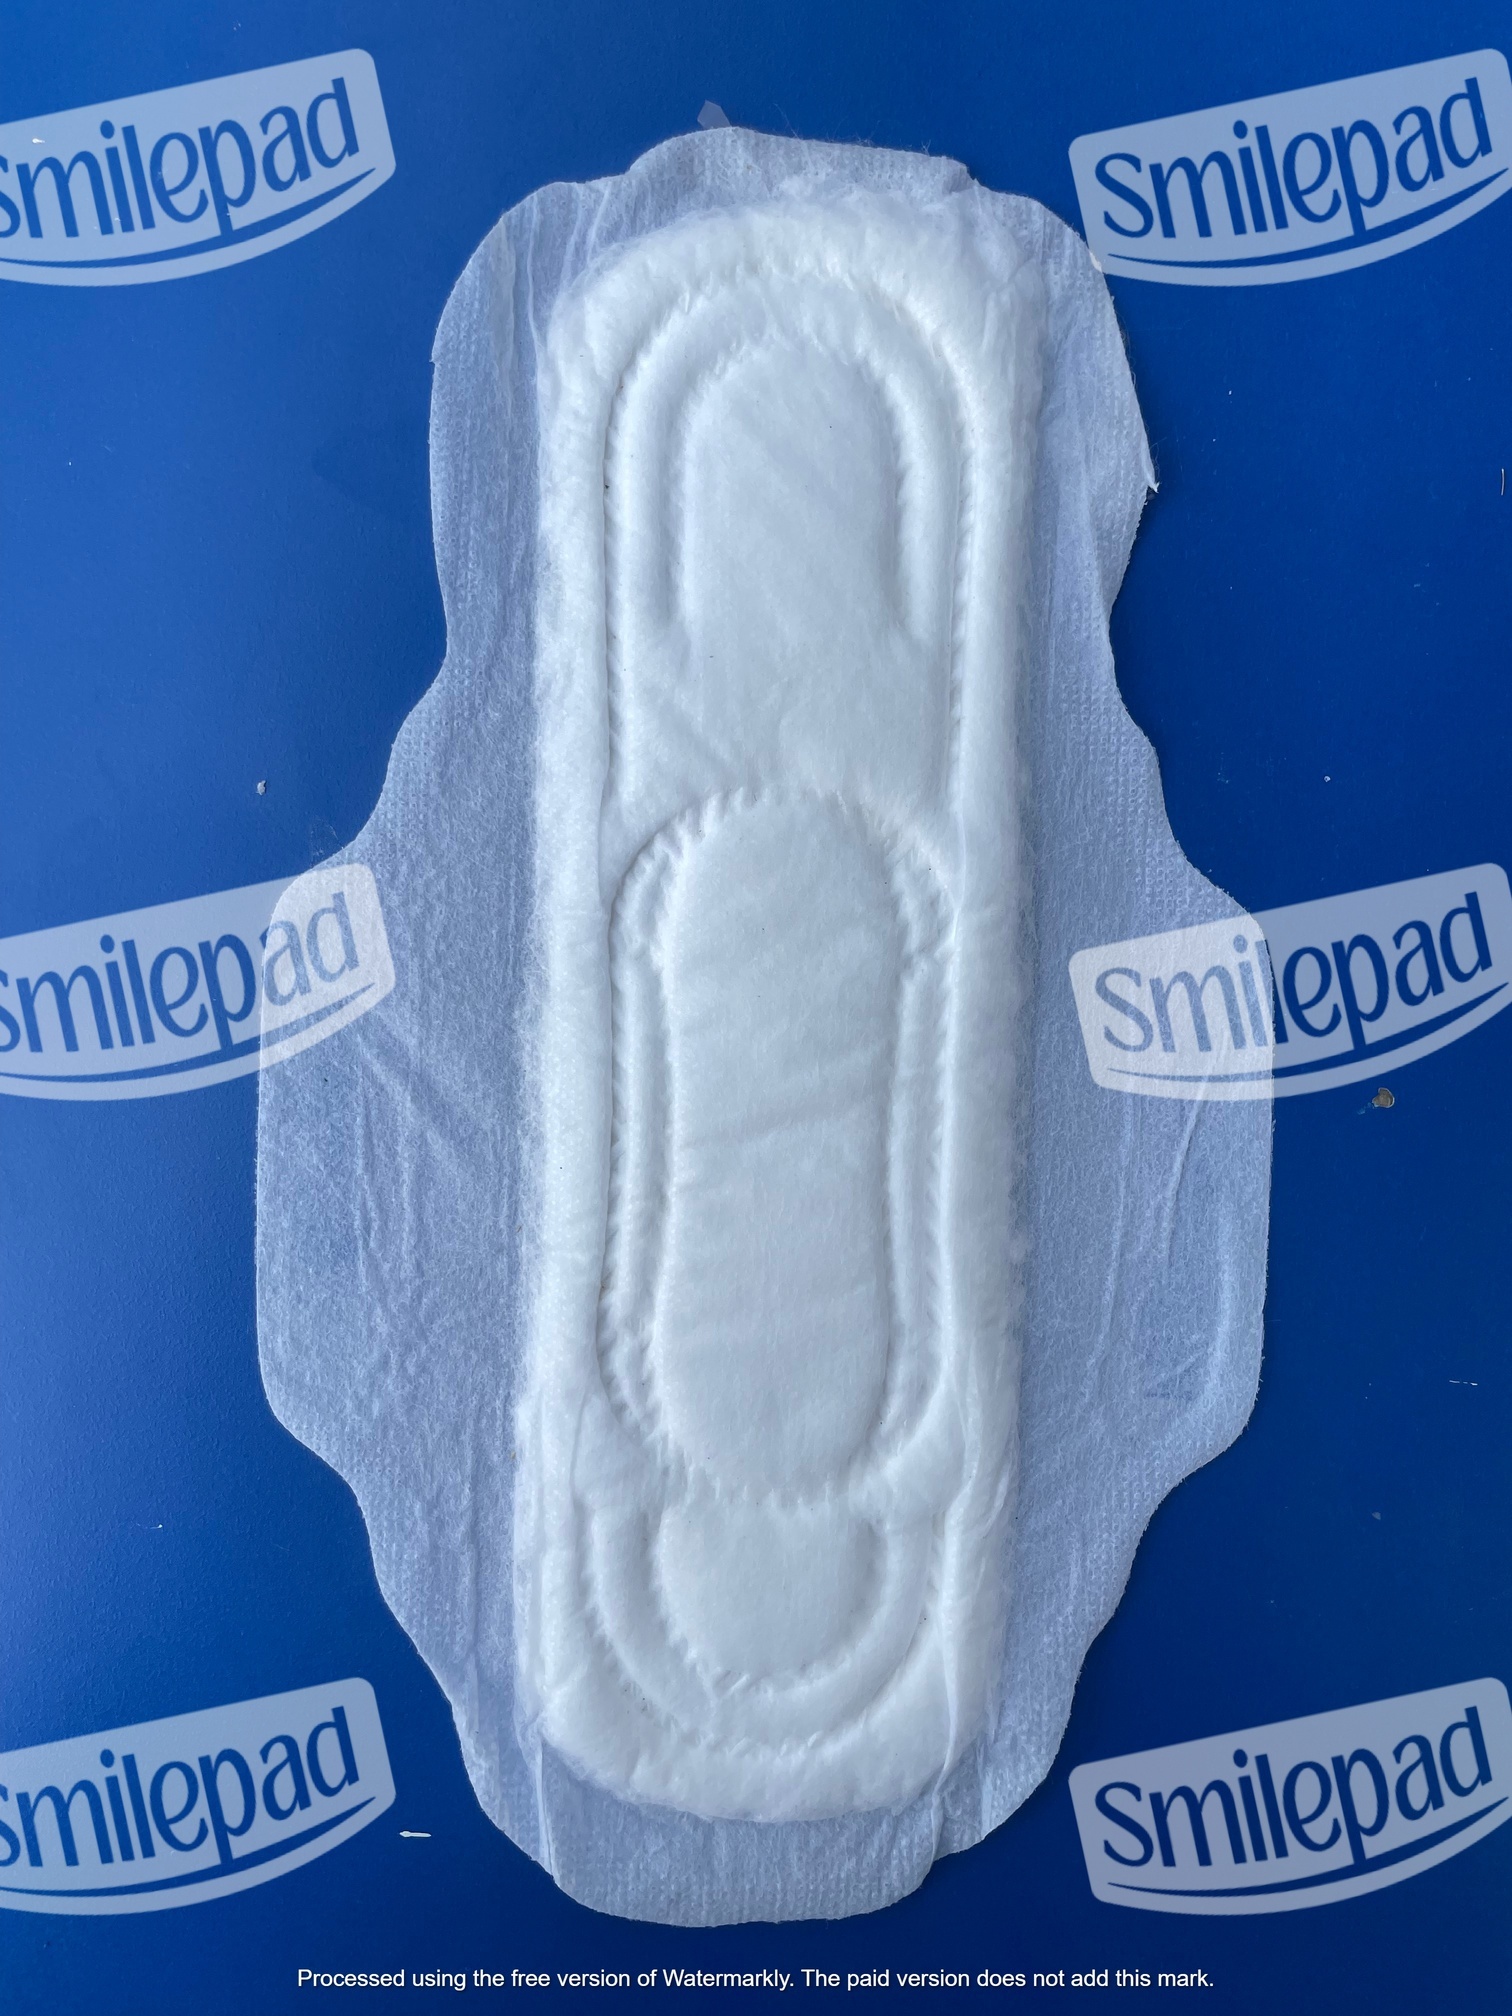 sanitary pad